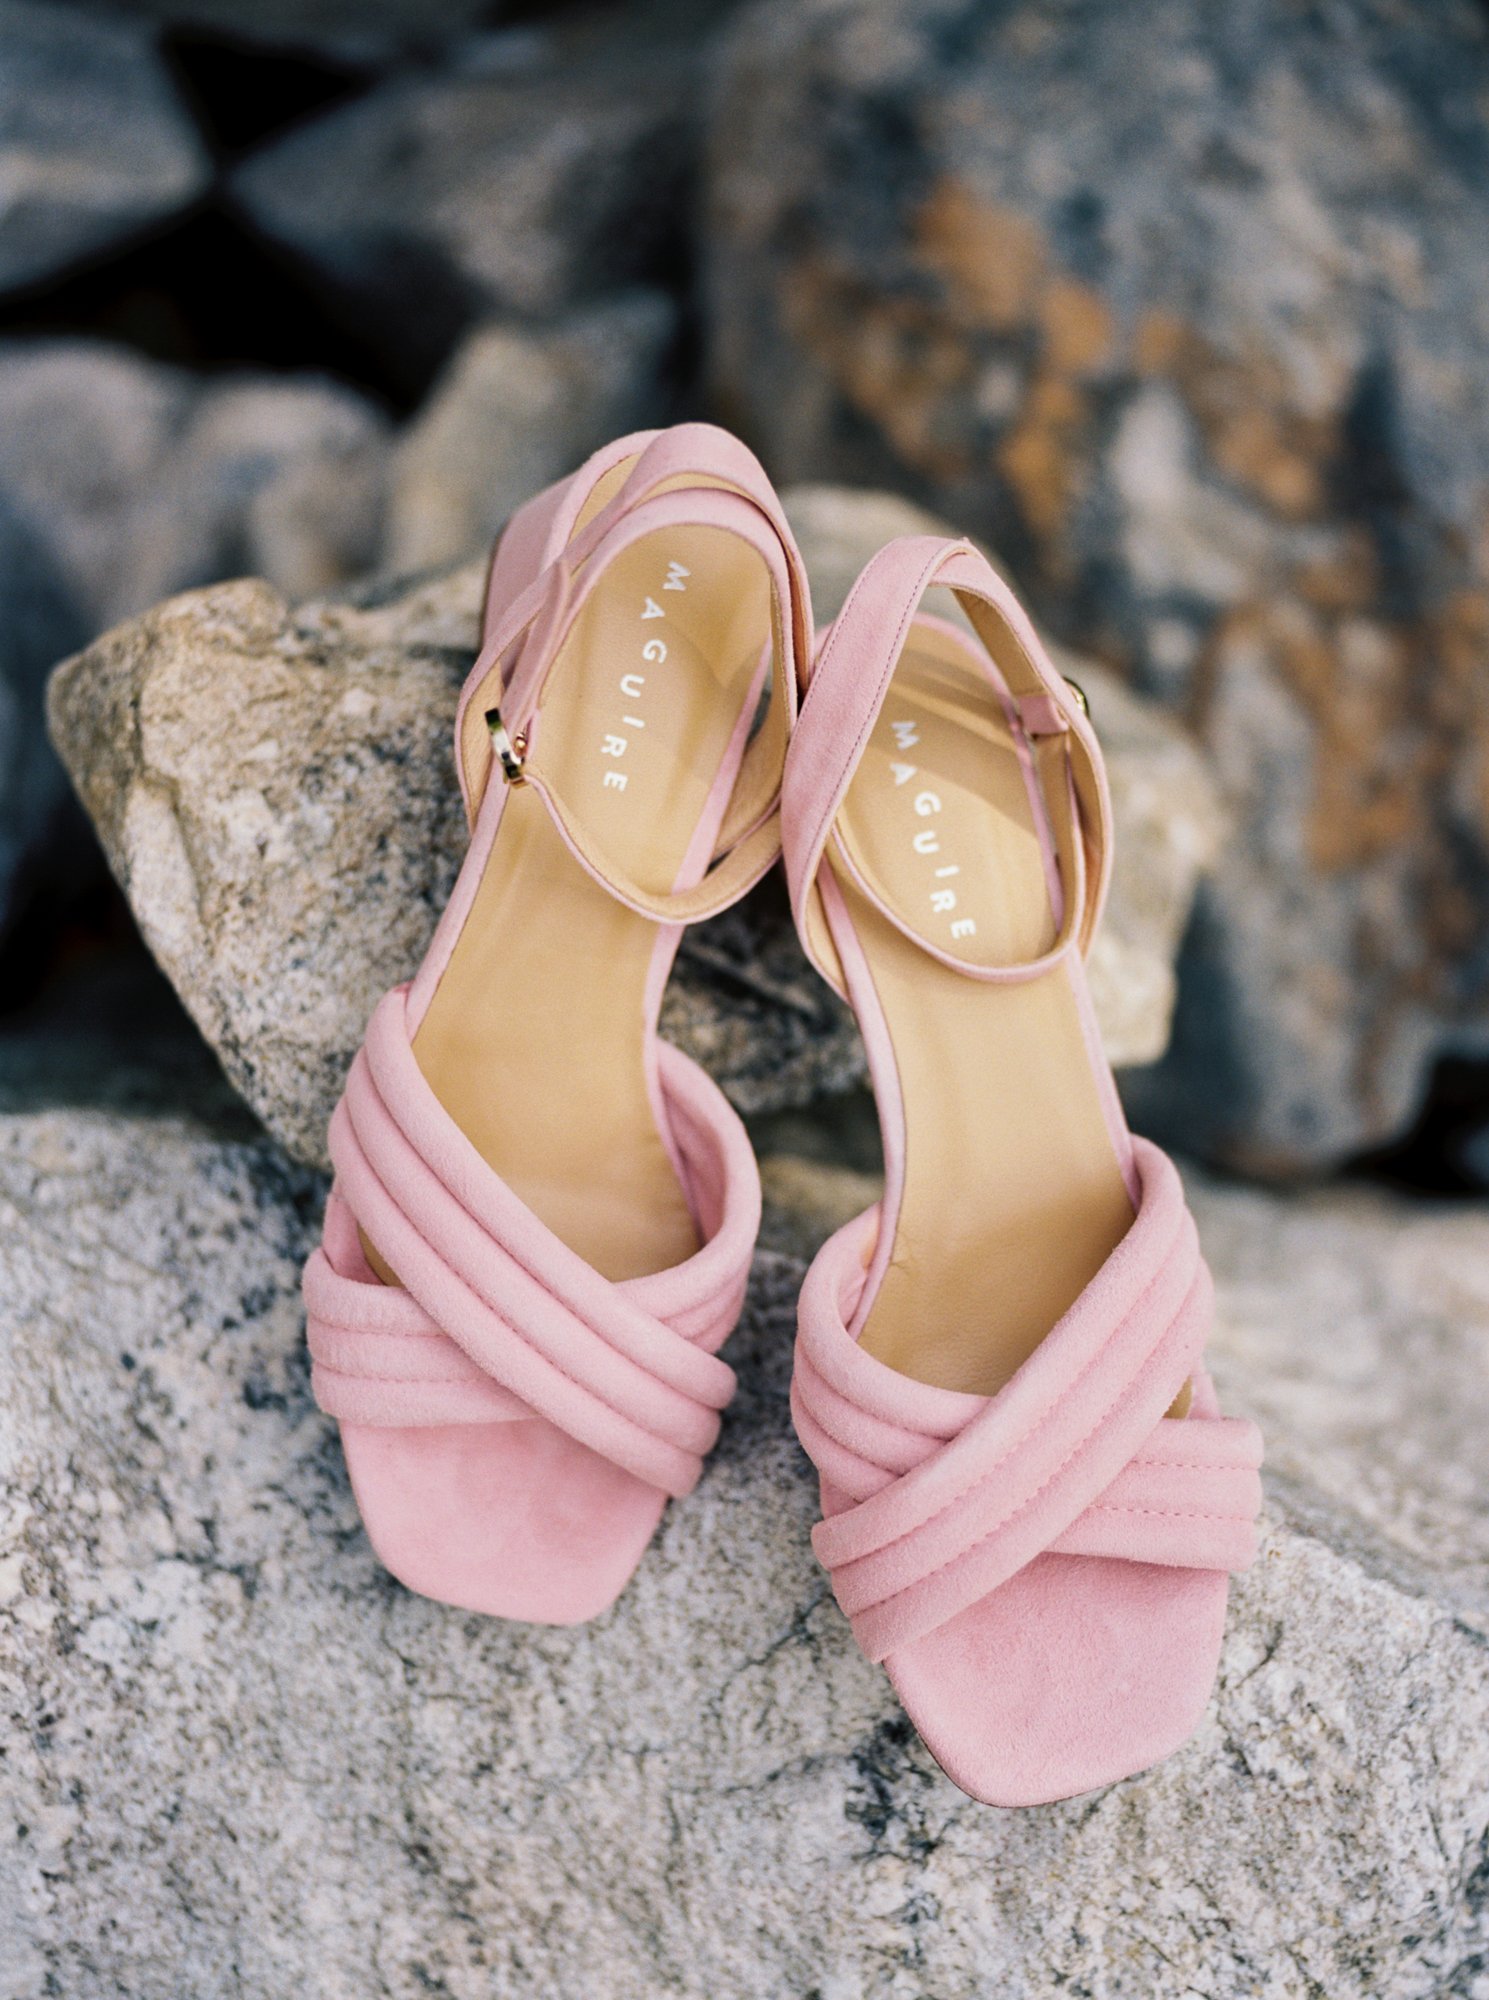  Pink wedding shoes on stone background 